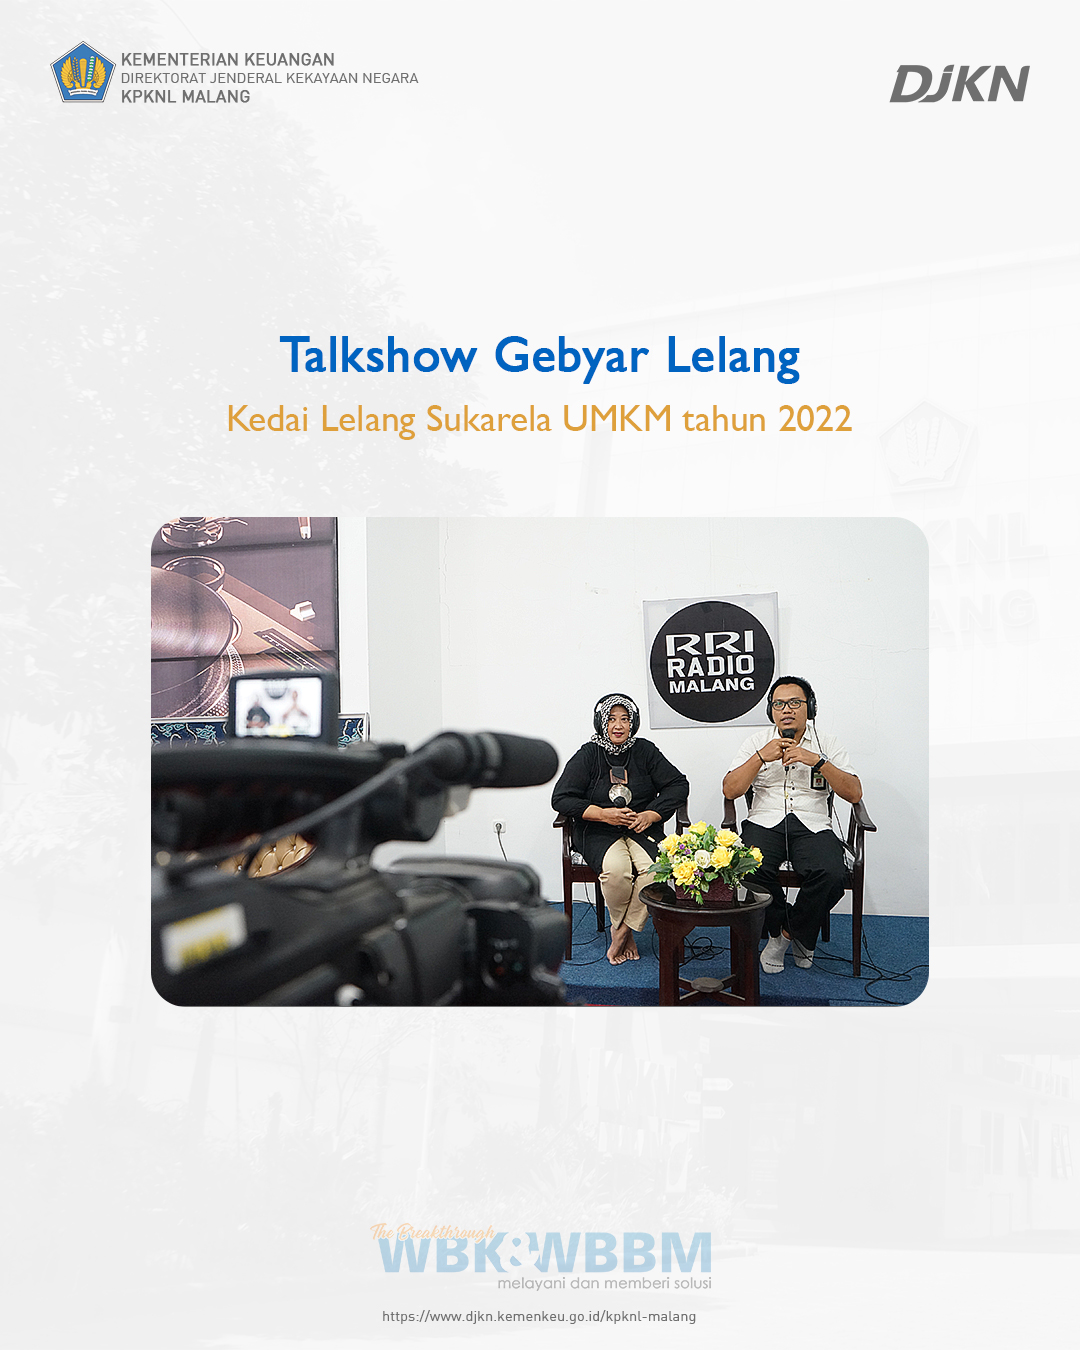 Gandeng RRI, KPKNL Malang Gelar Talk Show Gebyar Lelang: Kedai Lelang Sukarela UMKM Tahun 2022